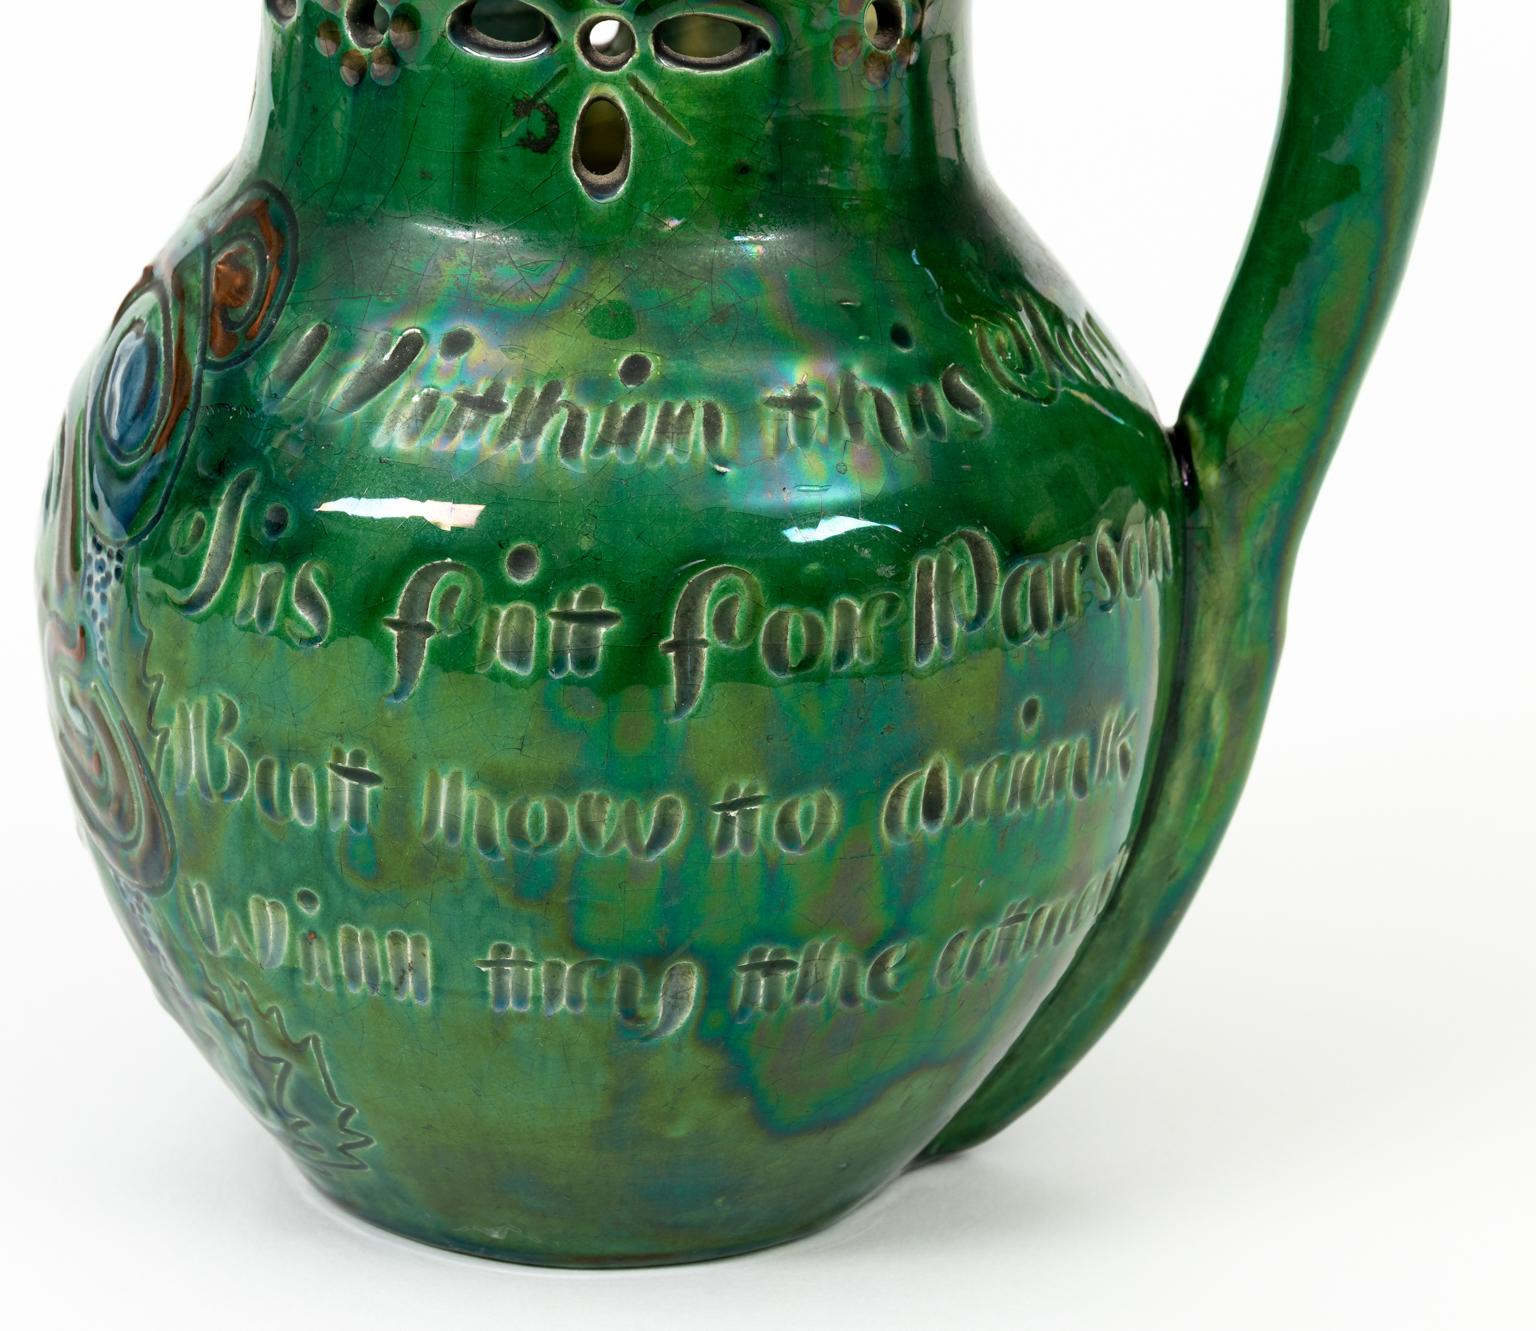 Motto puzzle jug by CH Brannam. Made in Barnstaple, North Devon, circa 1897. The ditty around the jug says 